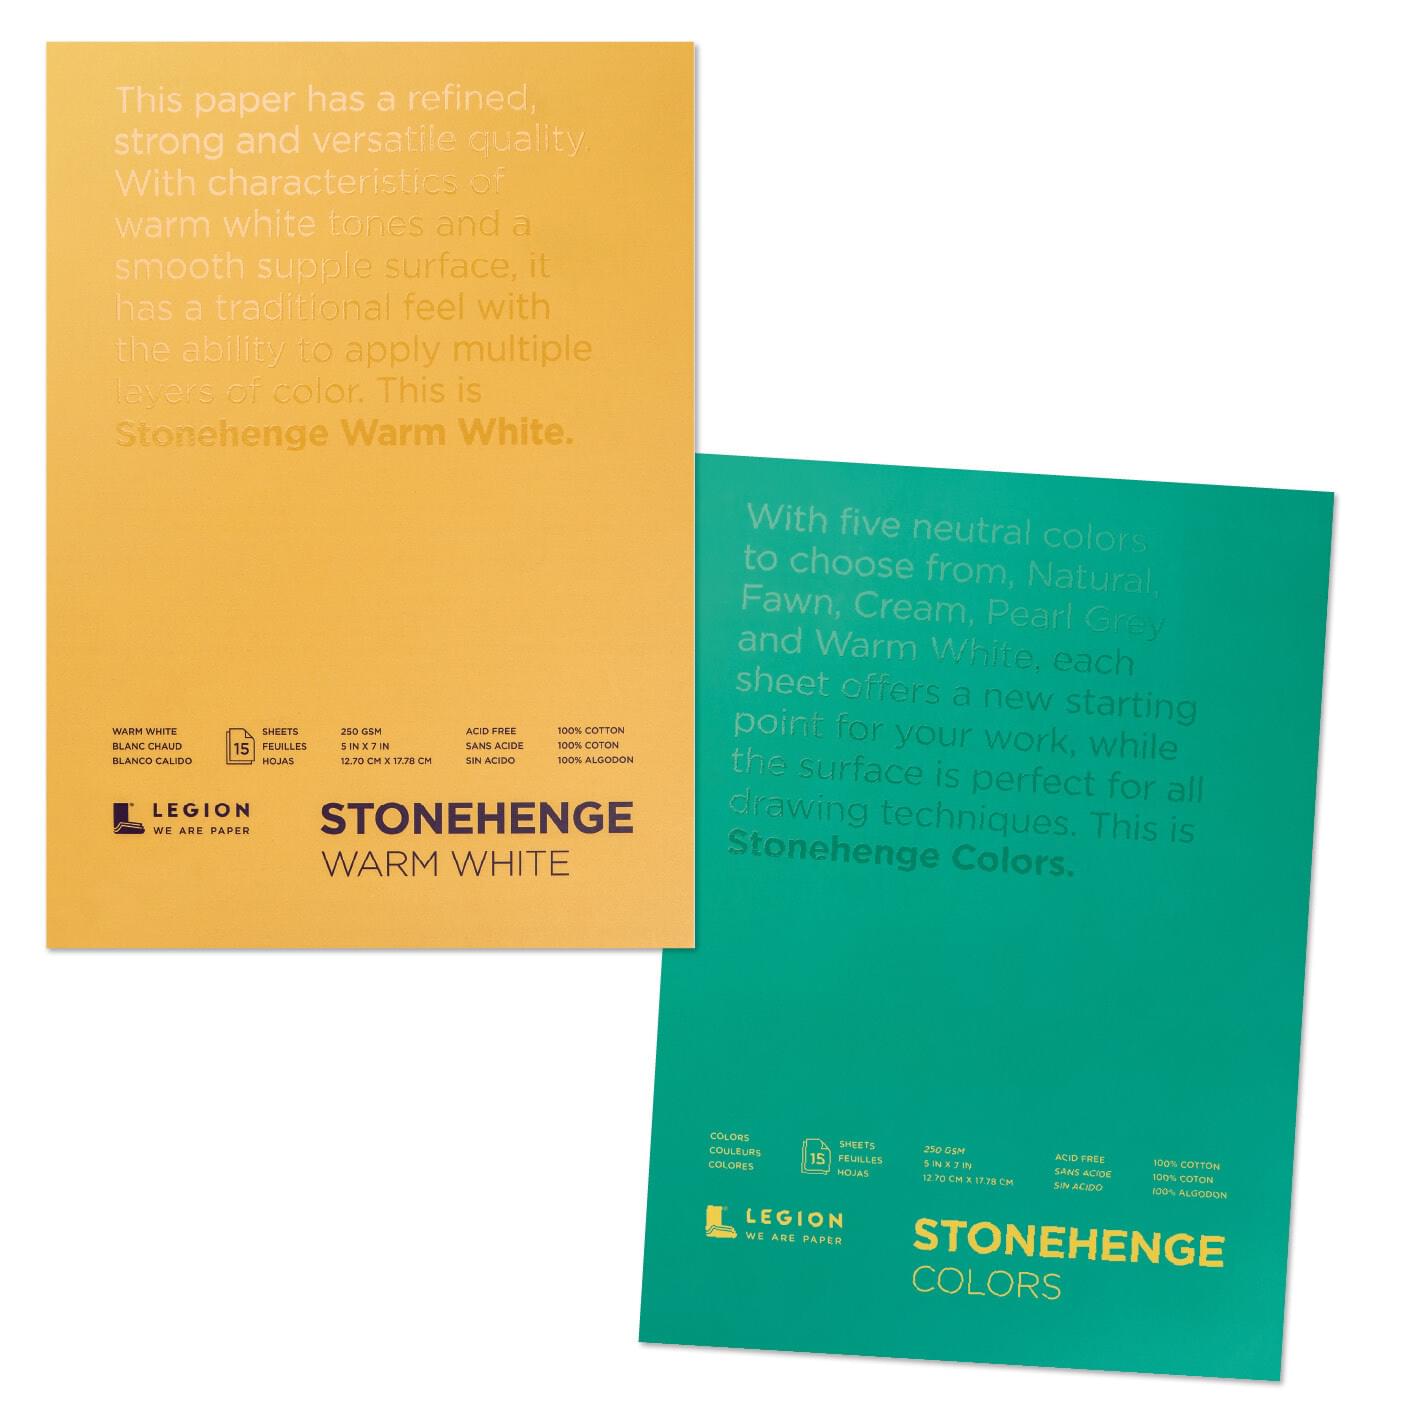 Stonehenge Kraft Paper Pads by Legion